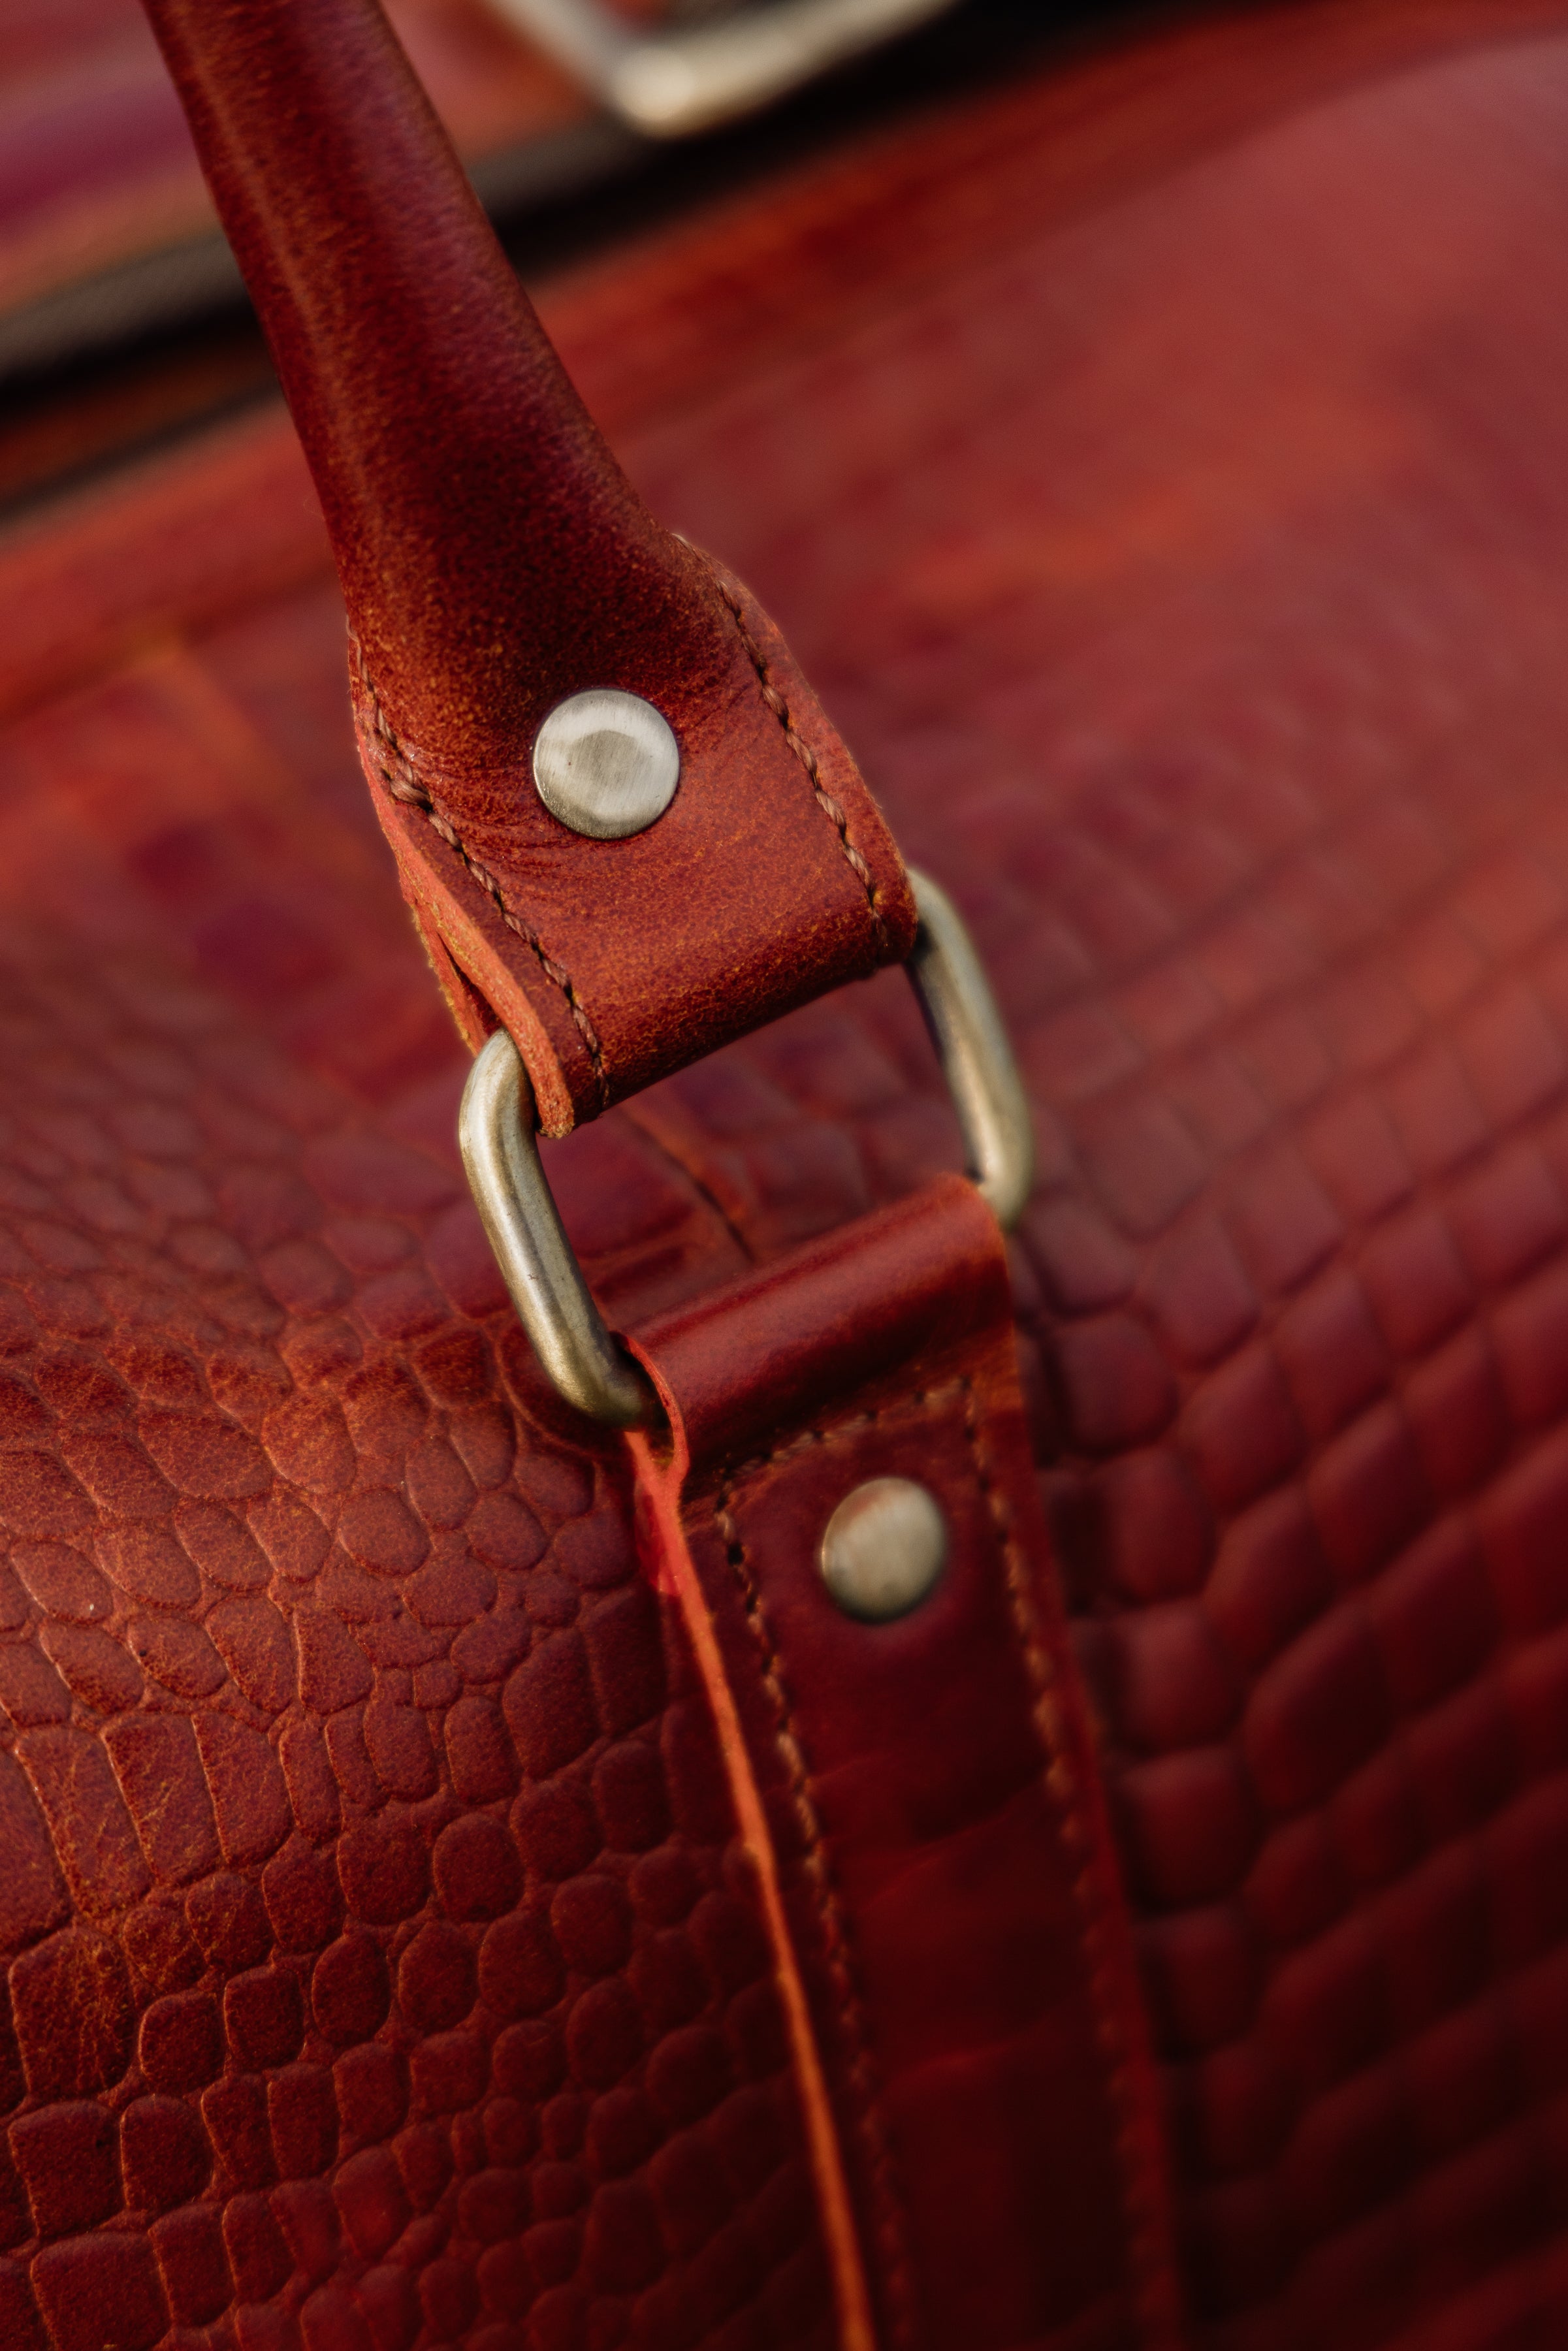 Rusty Red Leather Luxury Overnight Duffel Bag